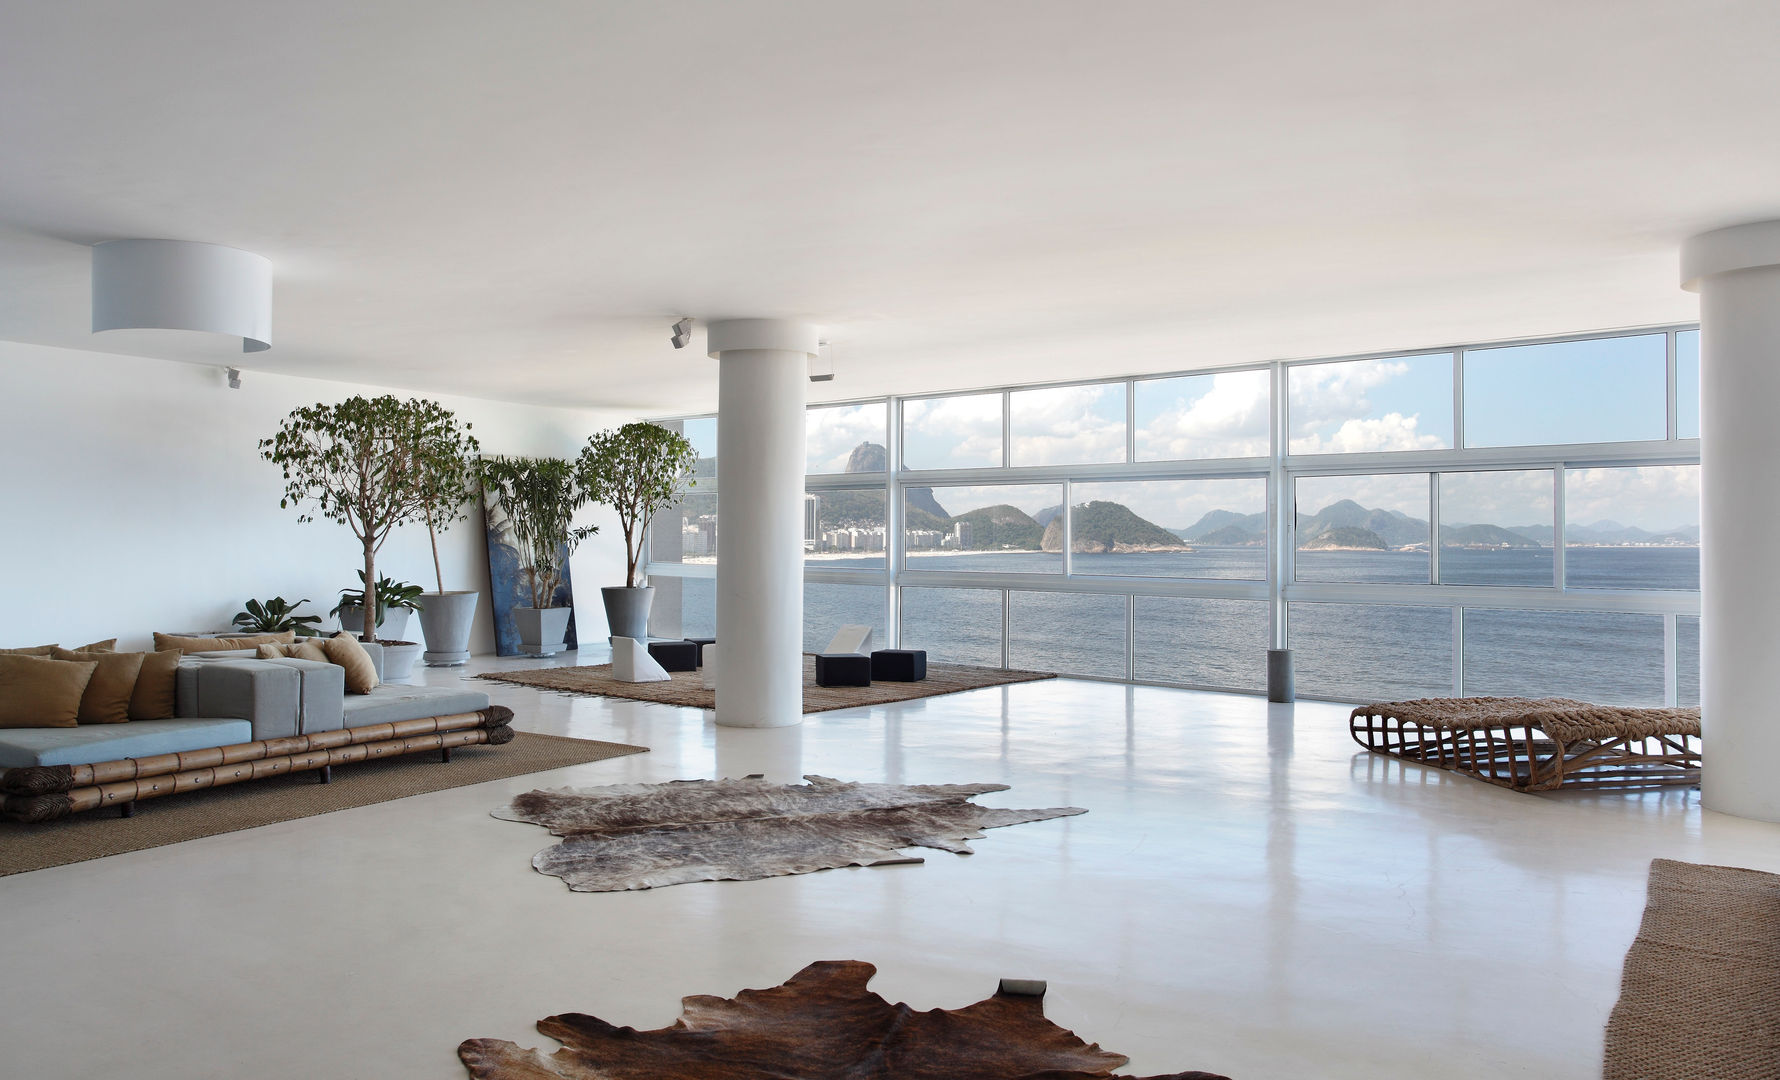 Copacabana 540m², House in Rio House in Rio Modern living room